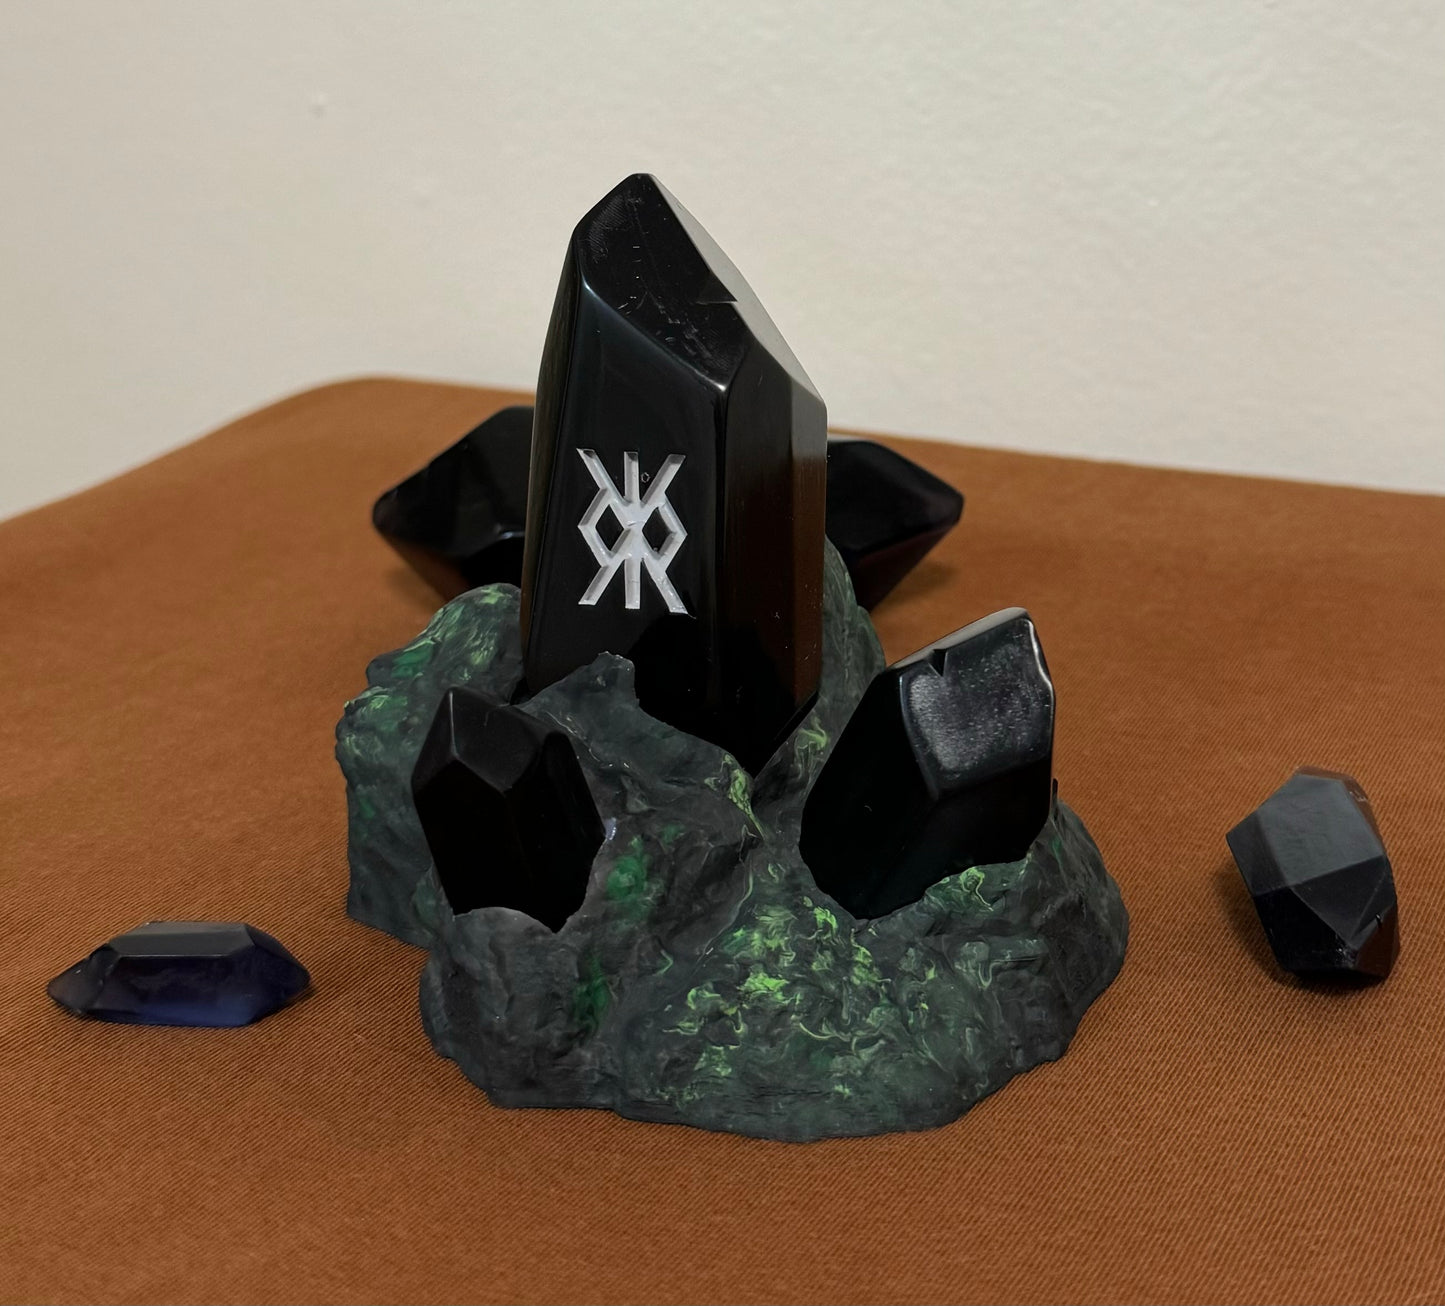 RUNESTONE MODEL (Large Stone and Base with Mini Stones) - PRE-ORDER